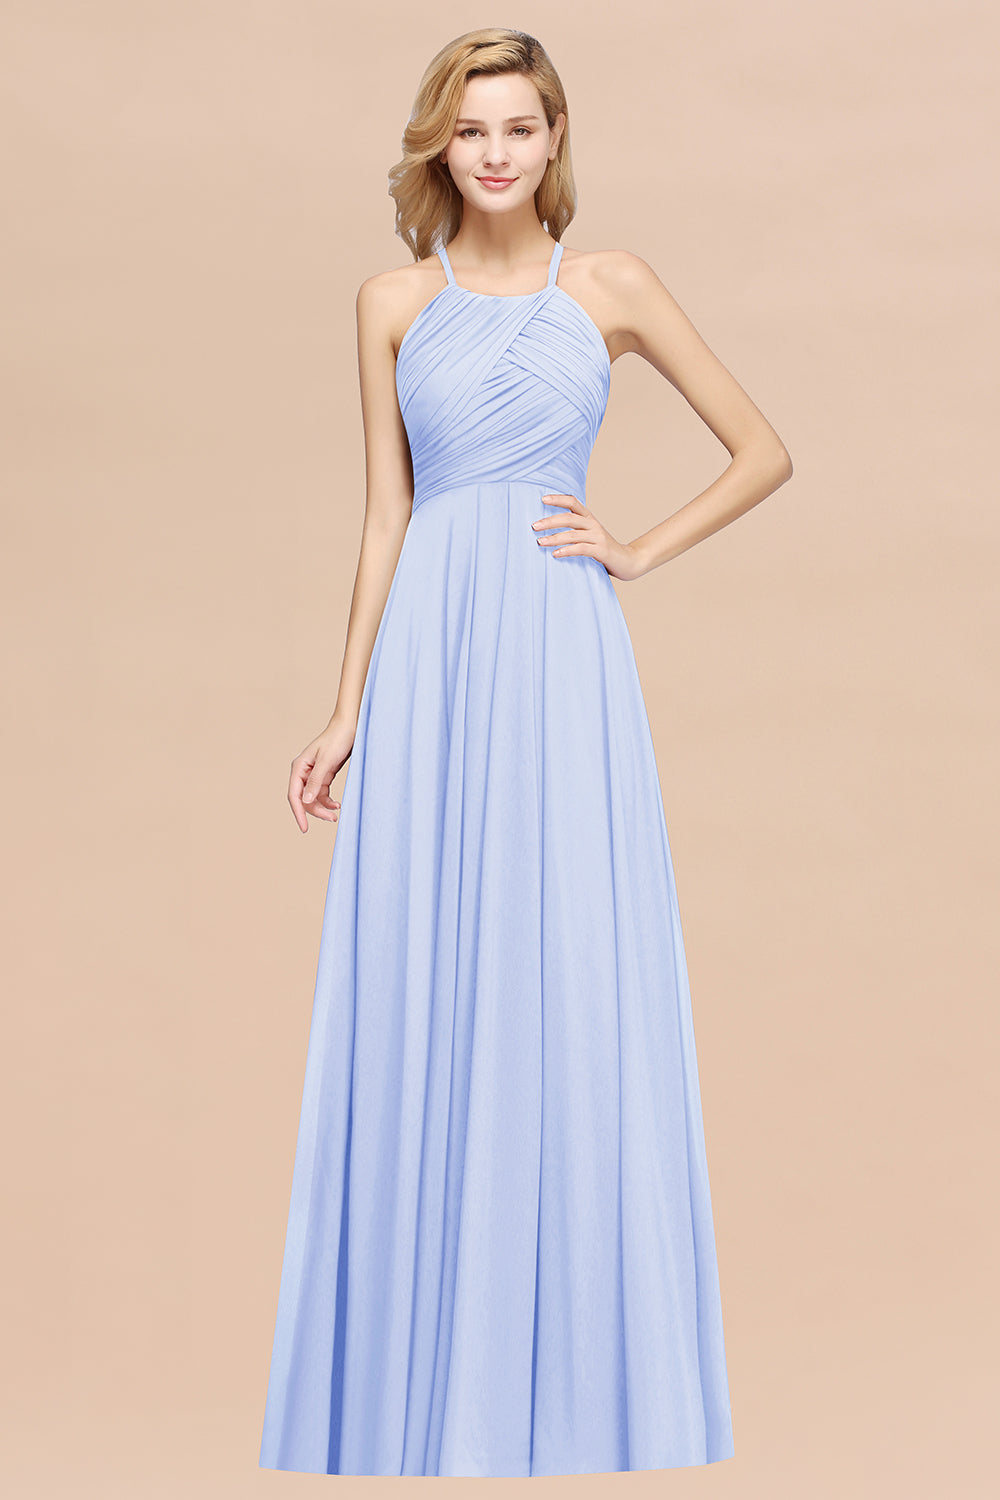 Halter Crisscross Pleated Bridesmaid Dress Blue Chiffon Sleeveless Maid of Honor Dress-27dress